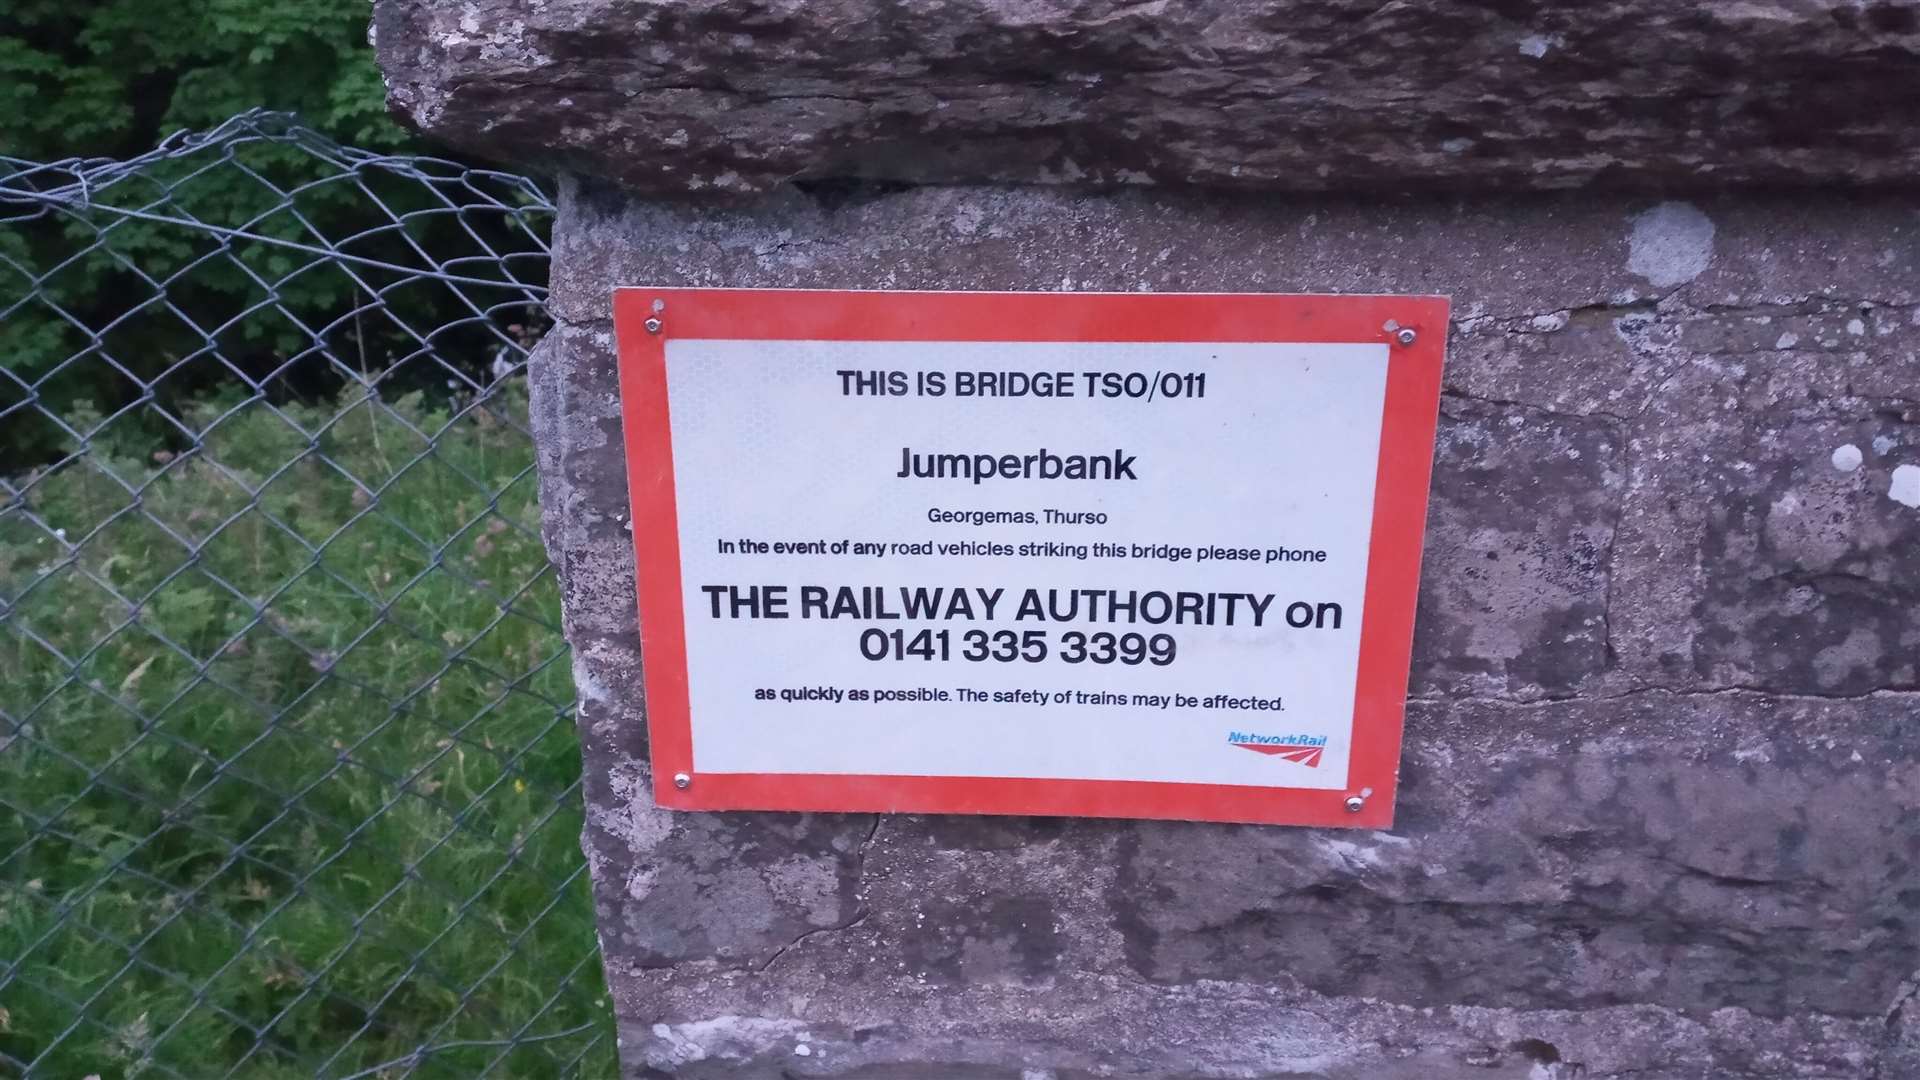 The incorrectly named bridge.